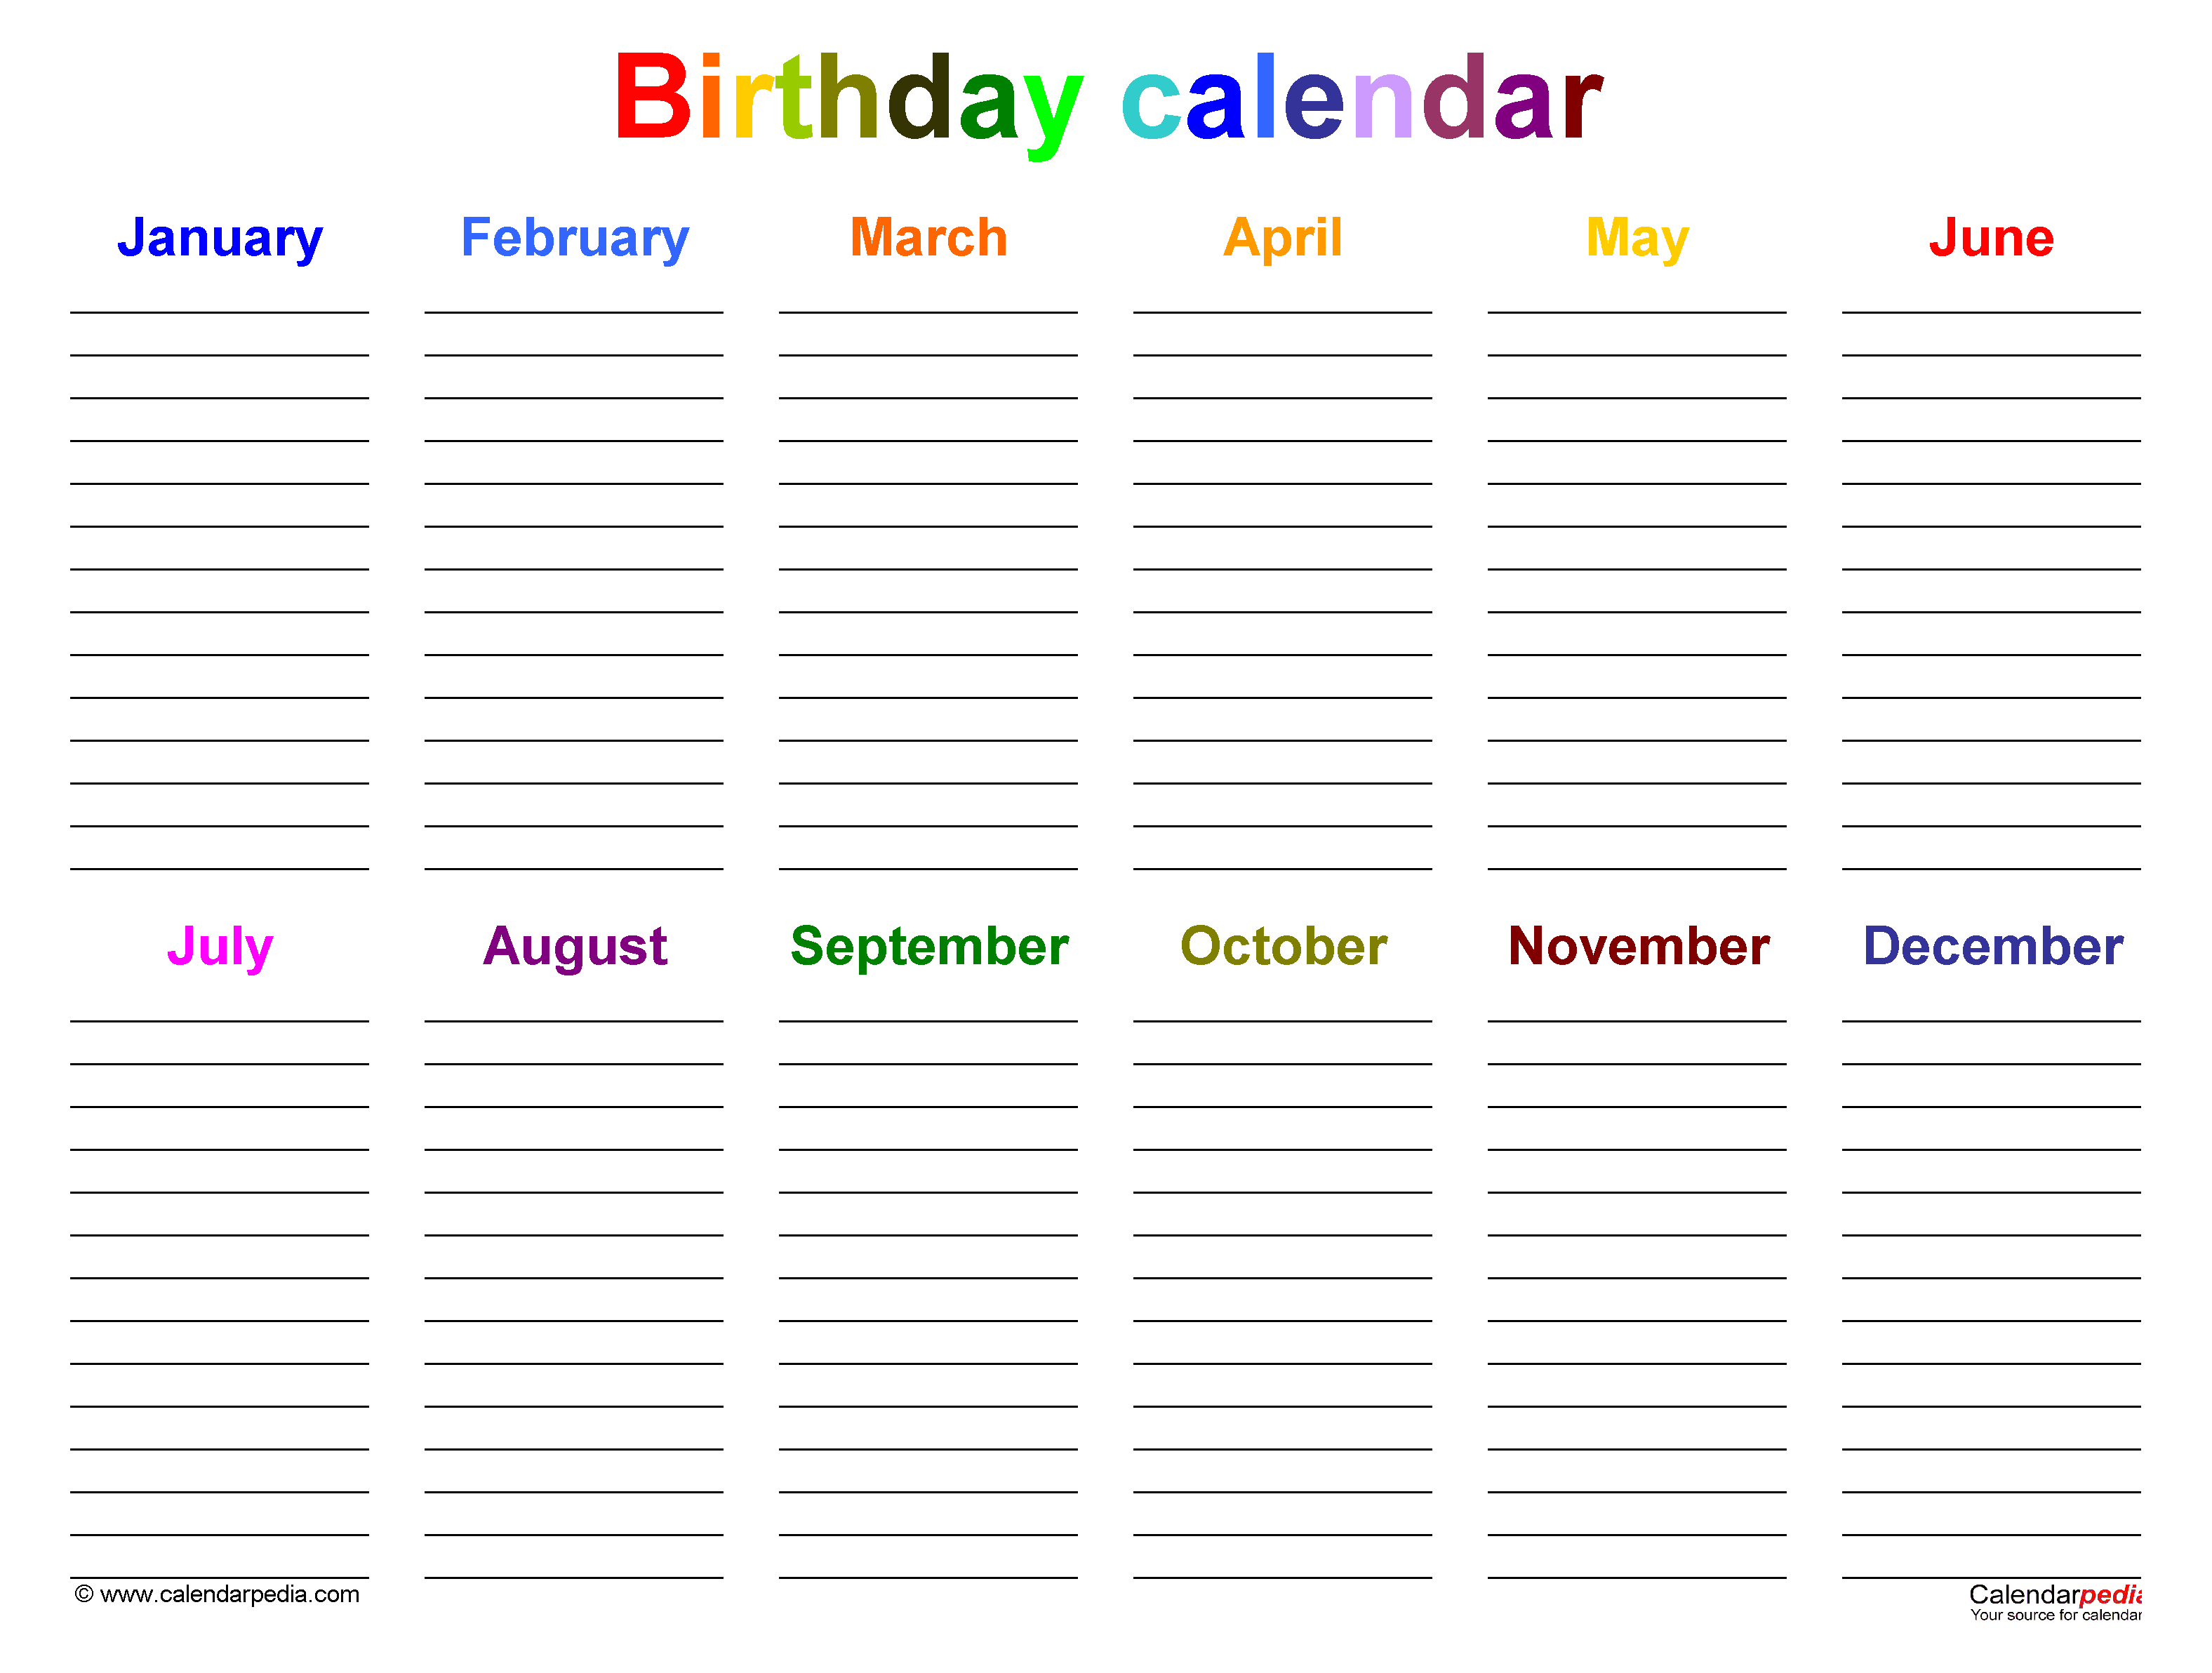 free calendar template for birthdays 20